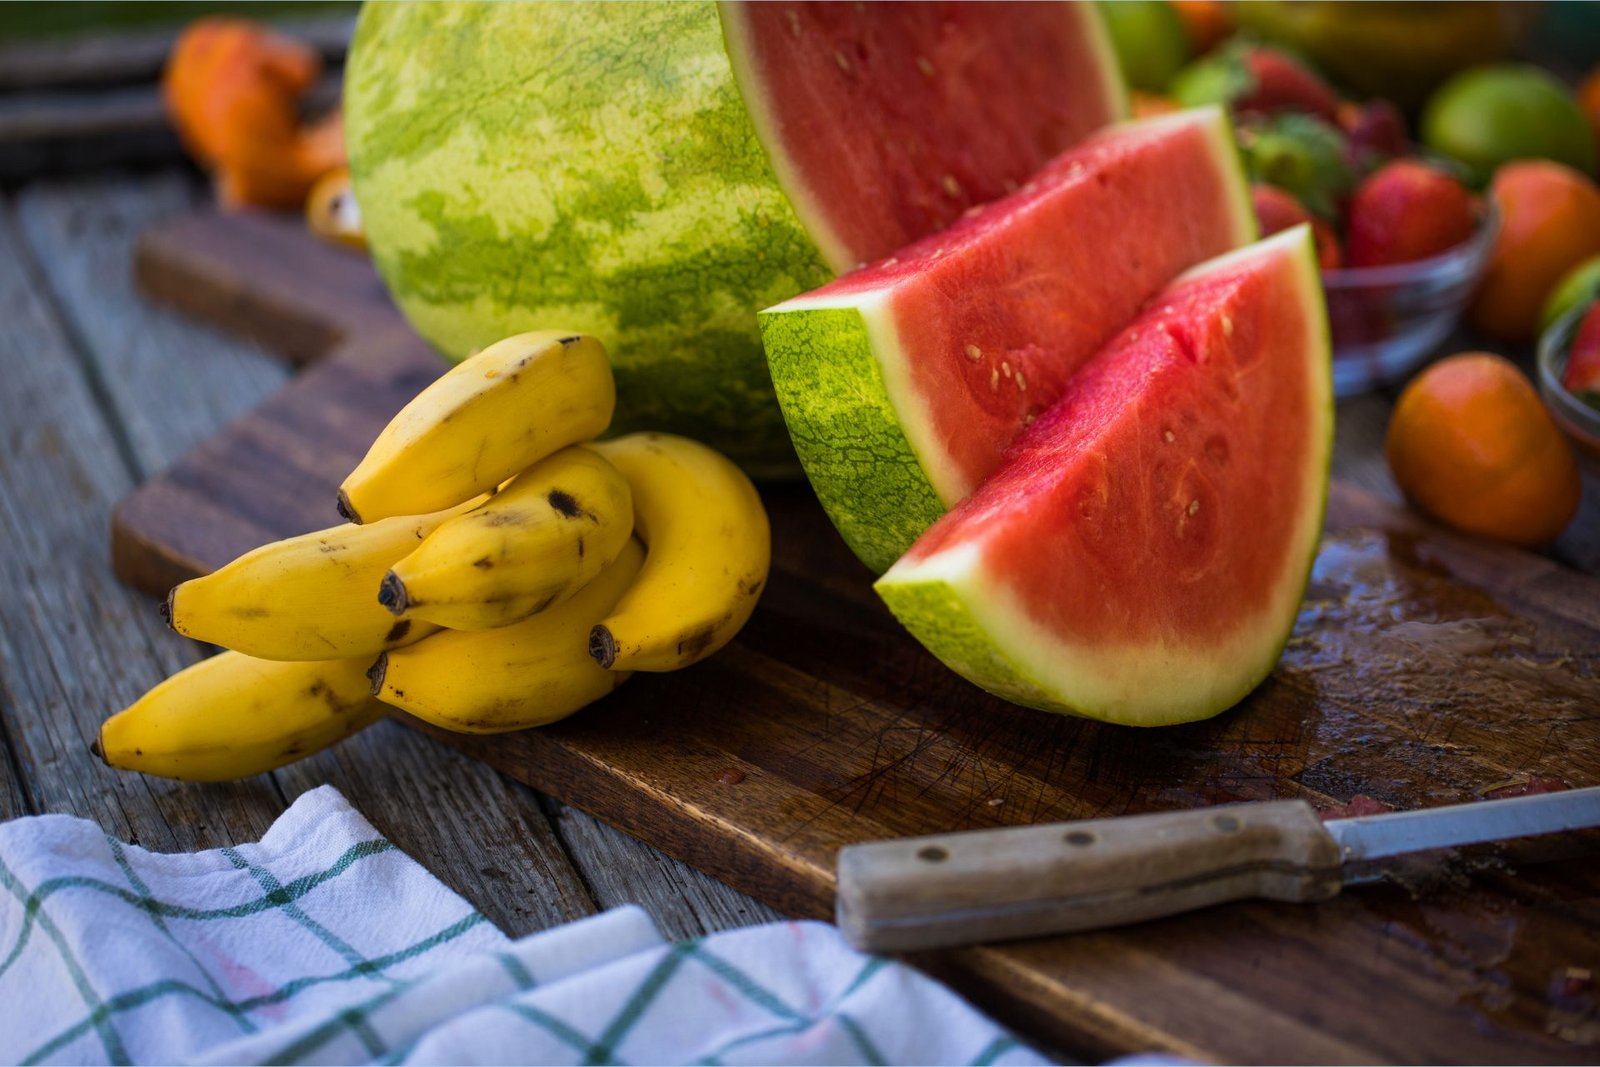 Potassium-rich bananas lie next to L-citrulline-rich sliced watermelon on a cutting board